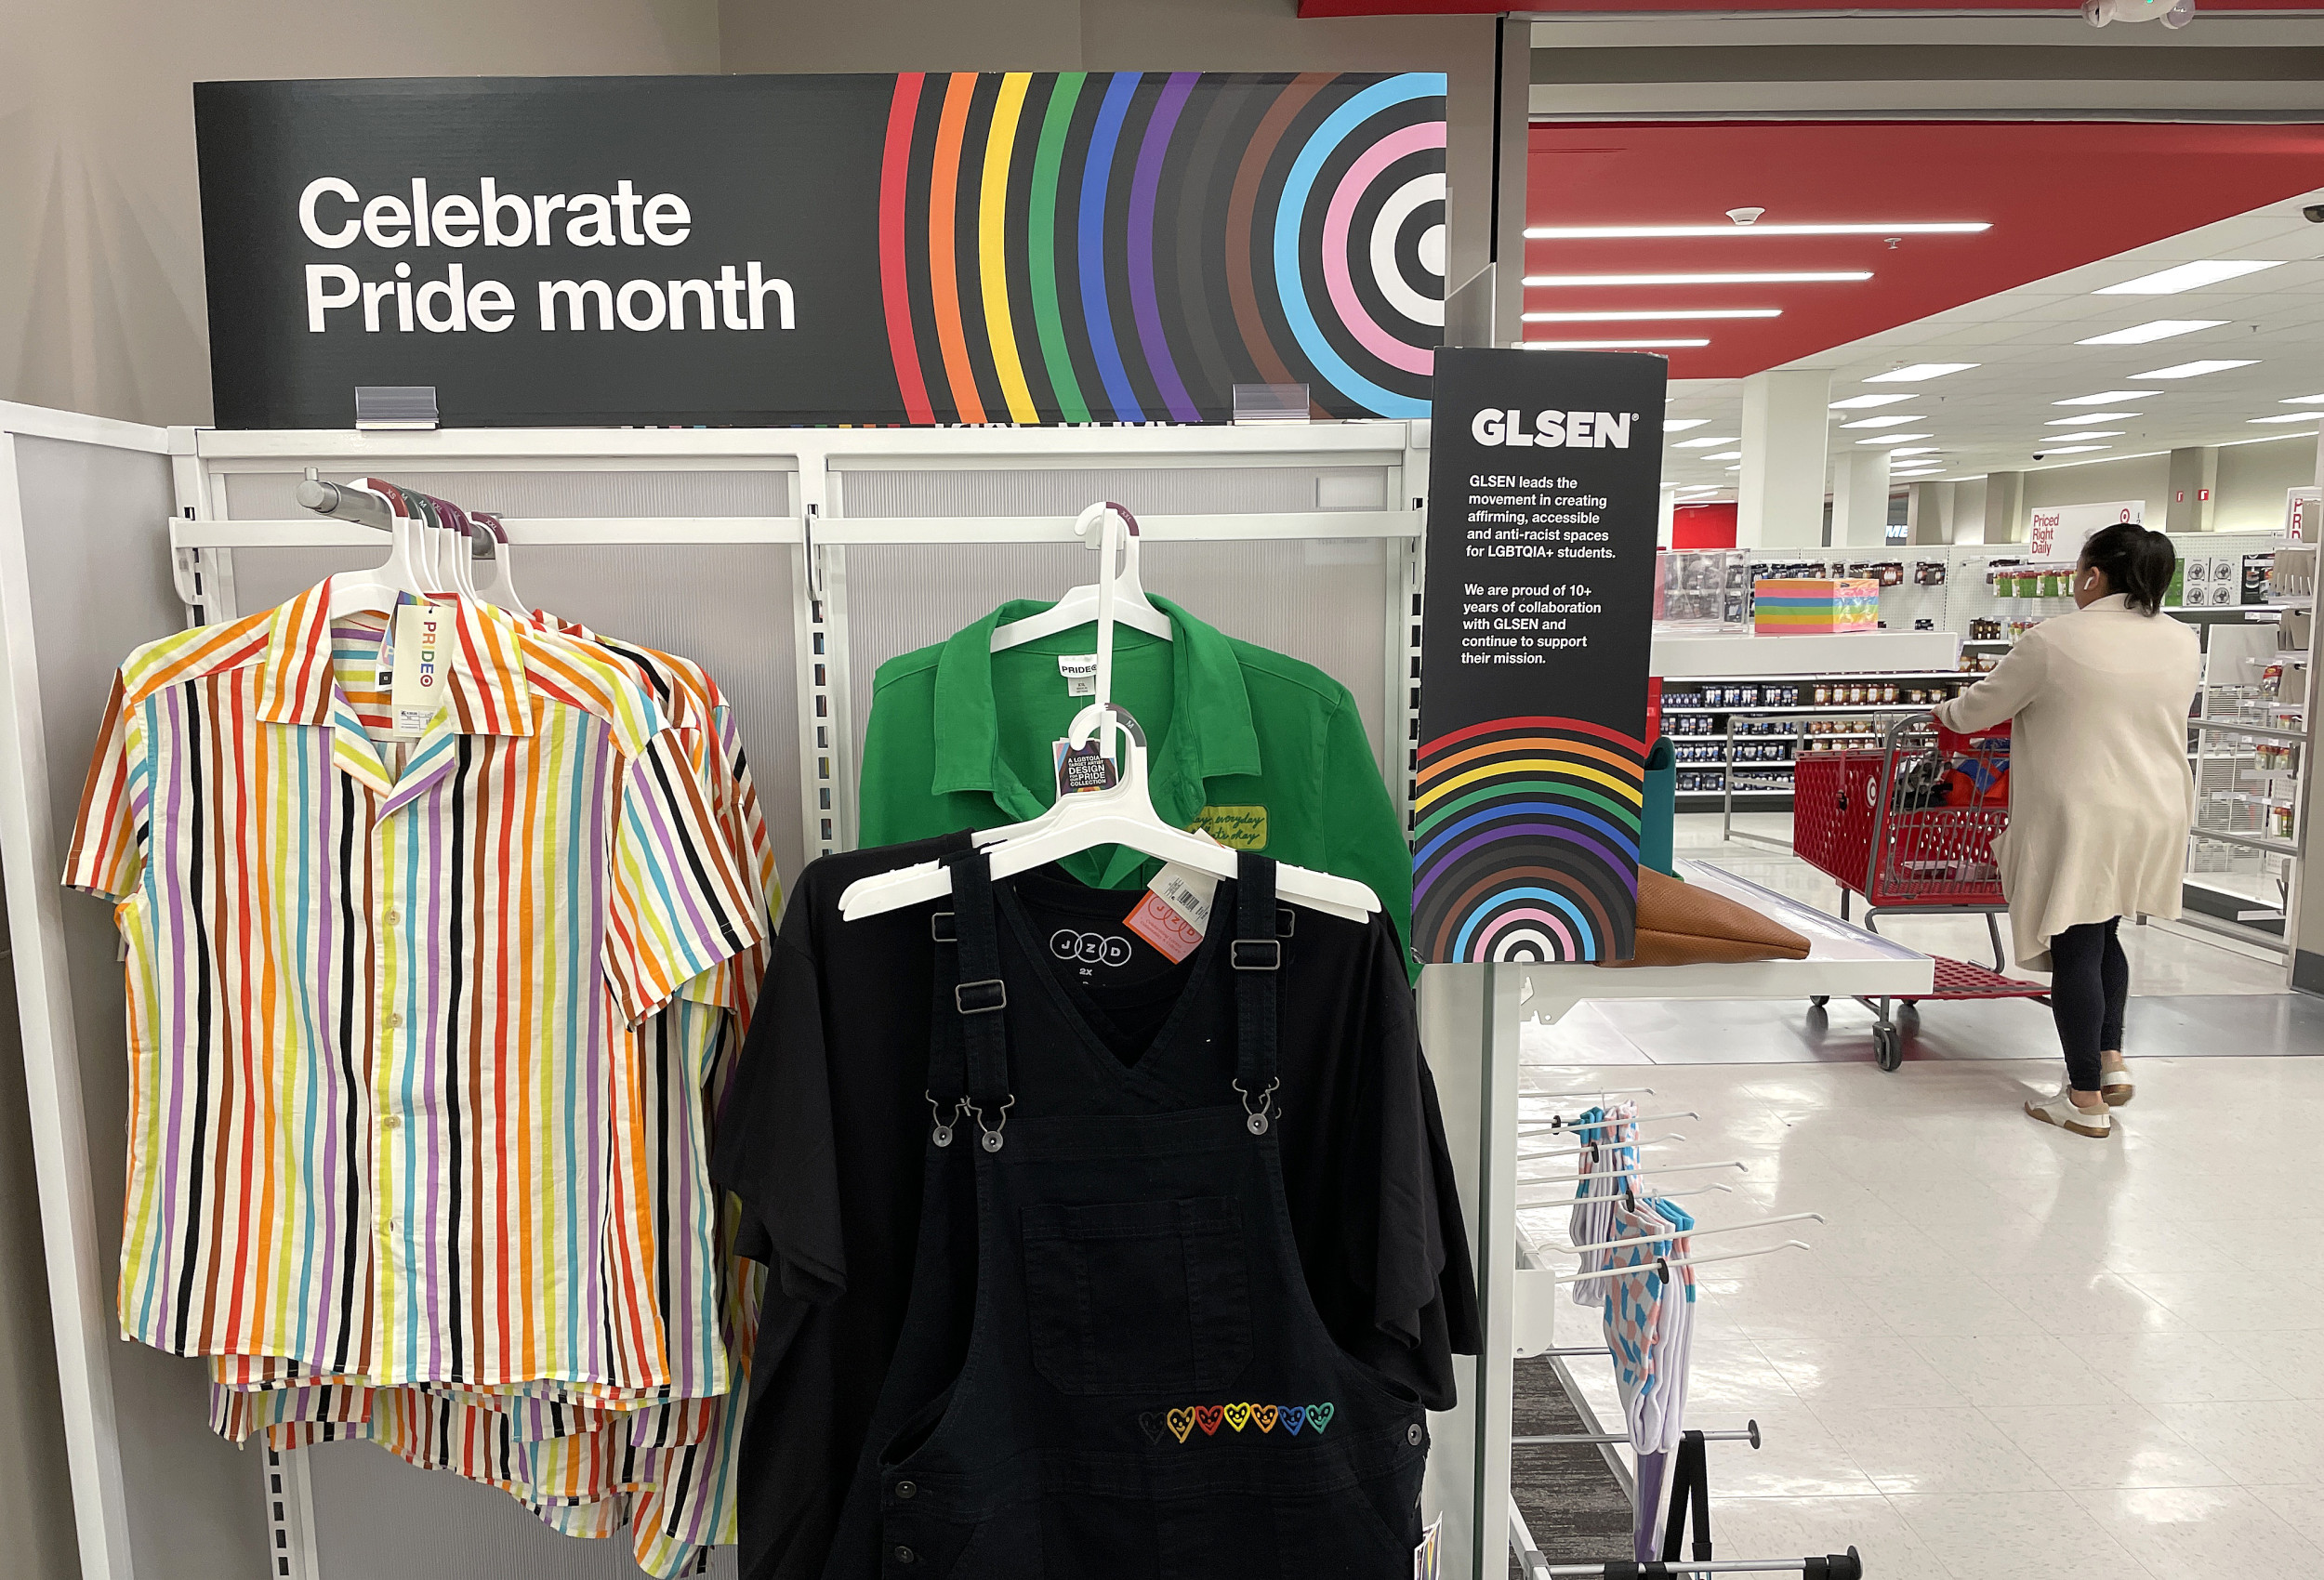 Target Pride Designer's 'Rainbow Capitalism' Swipe at Company 'Dangerous'